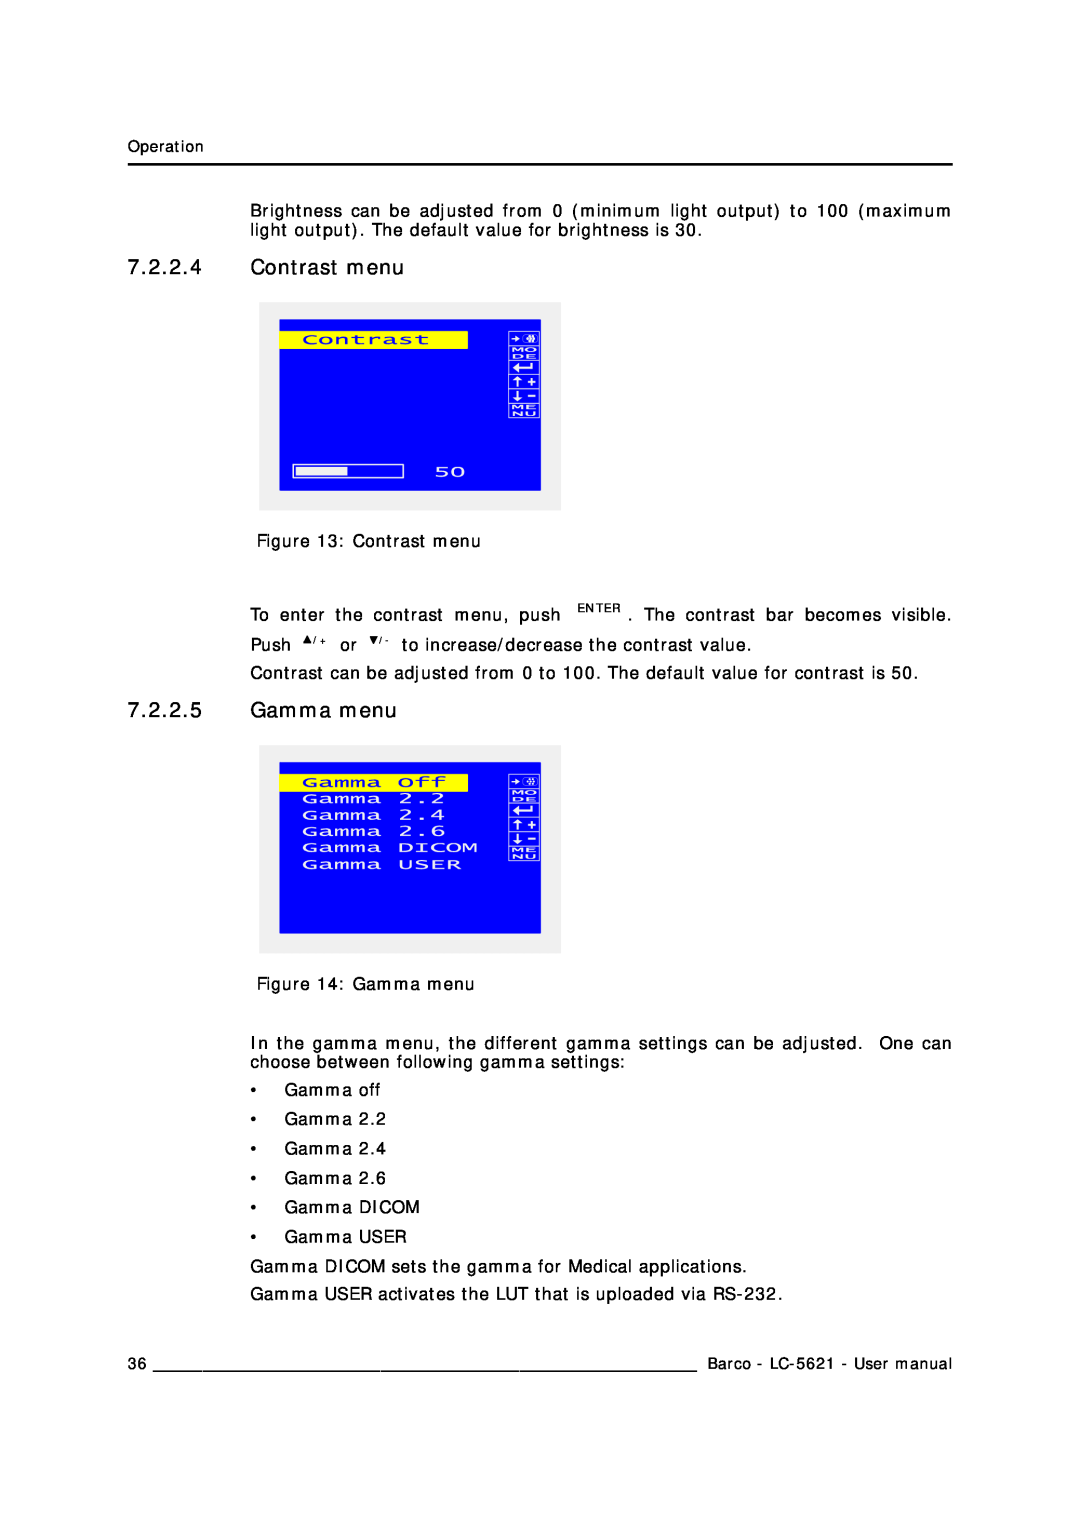 Barco LC-5621 user manual Contrast menu, Gamma menu 